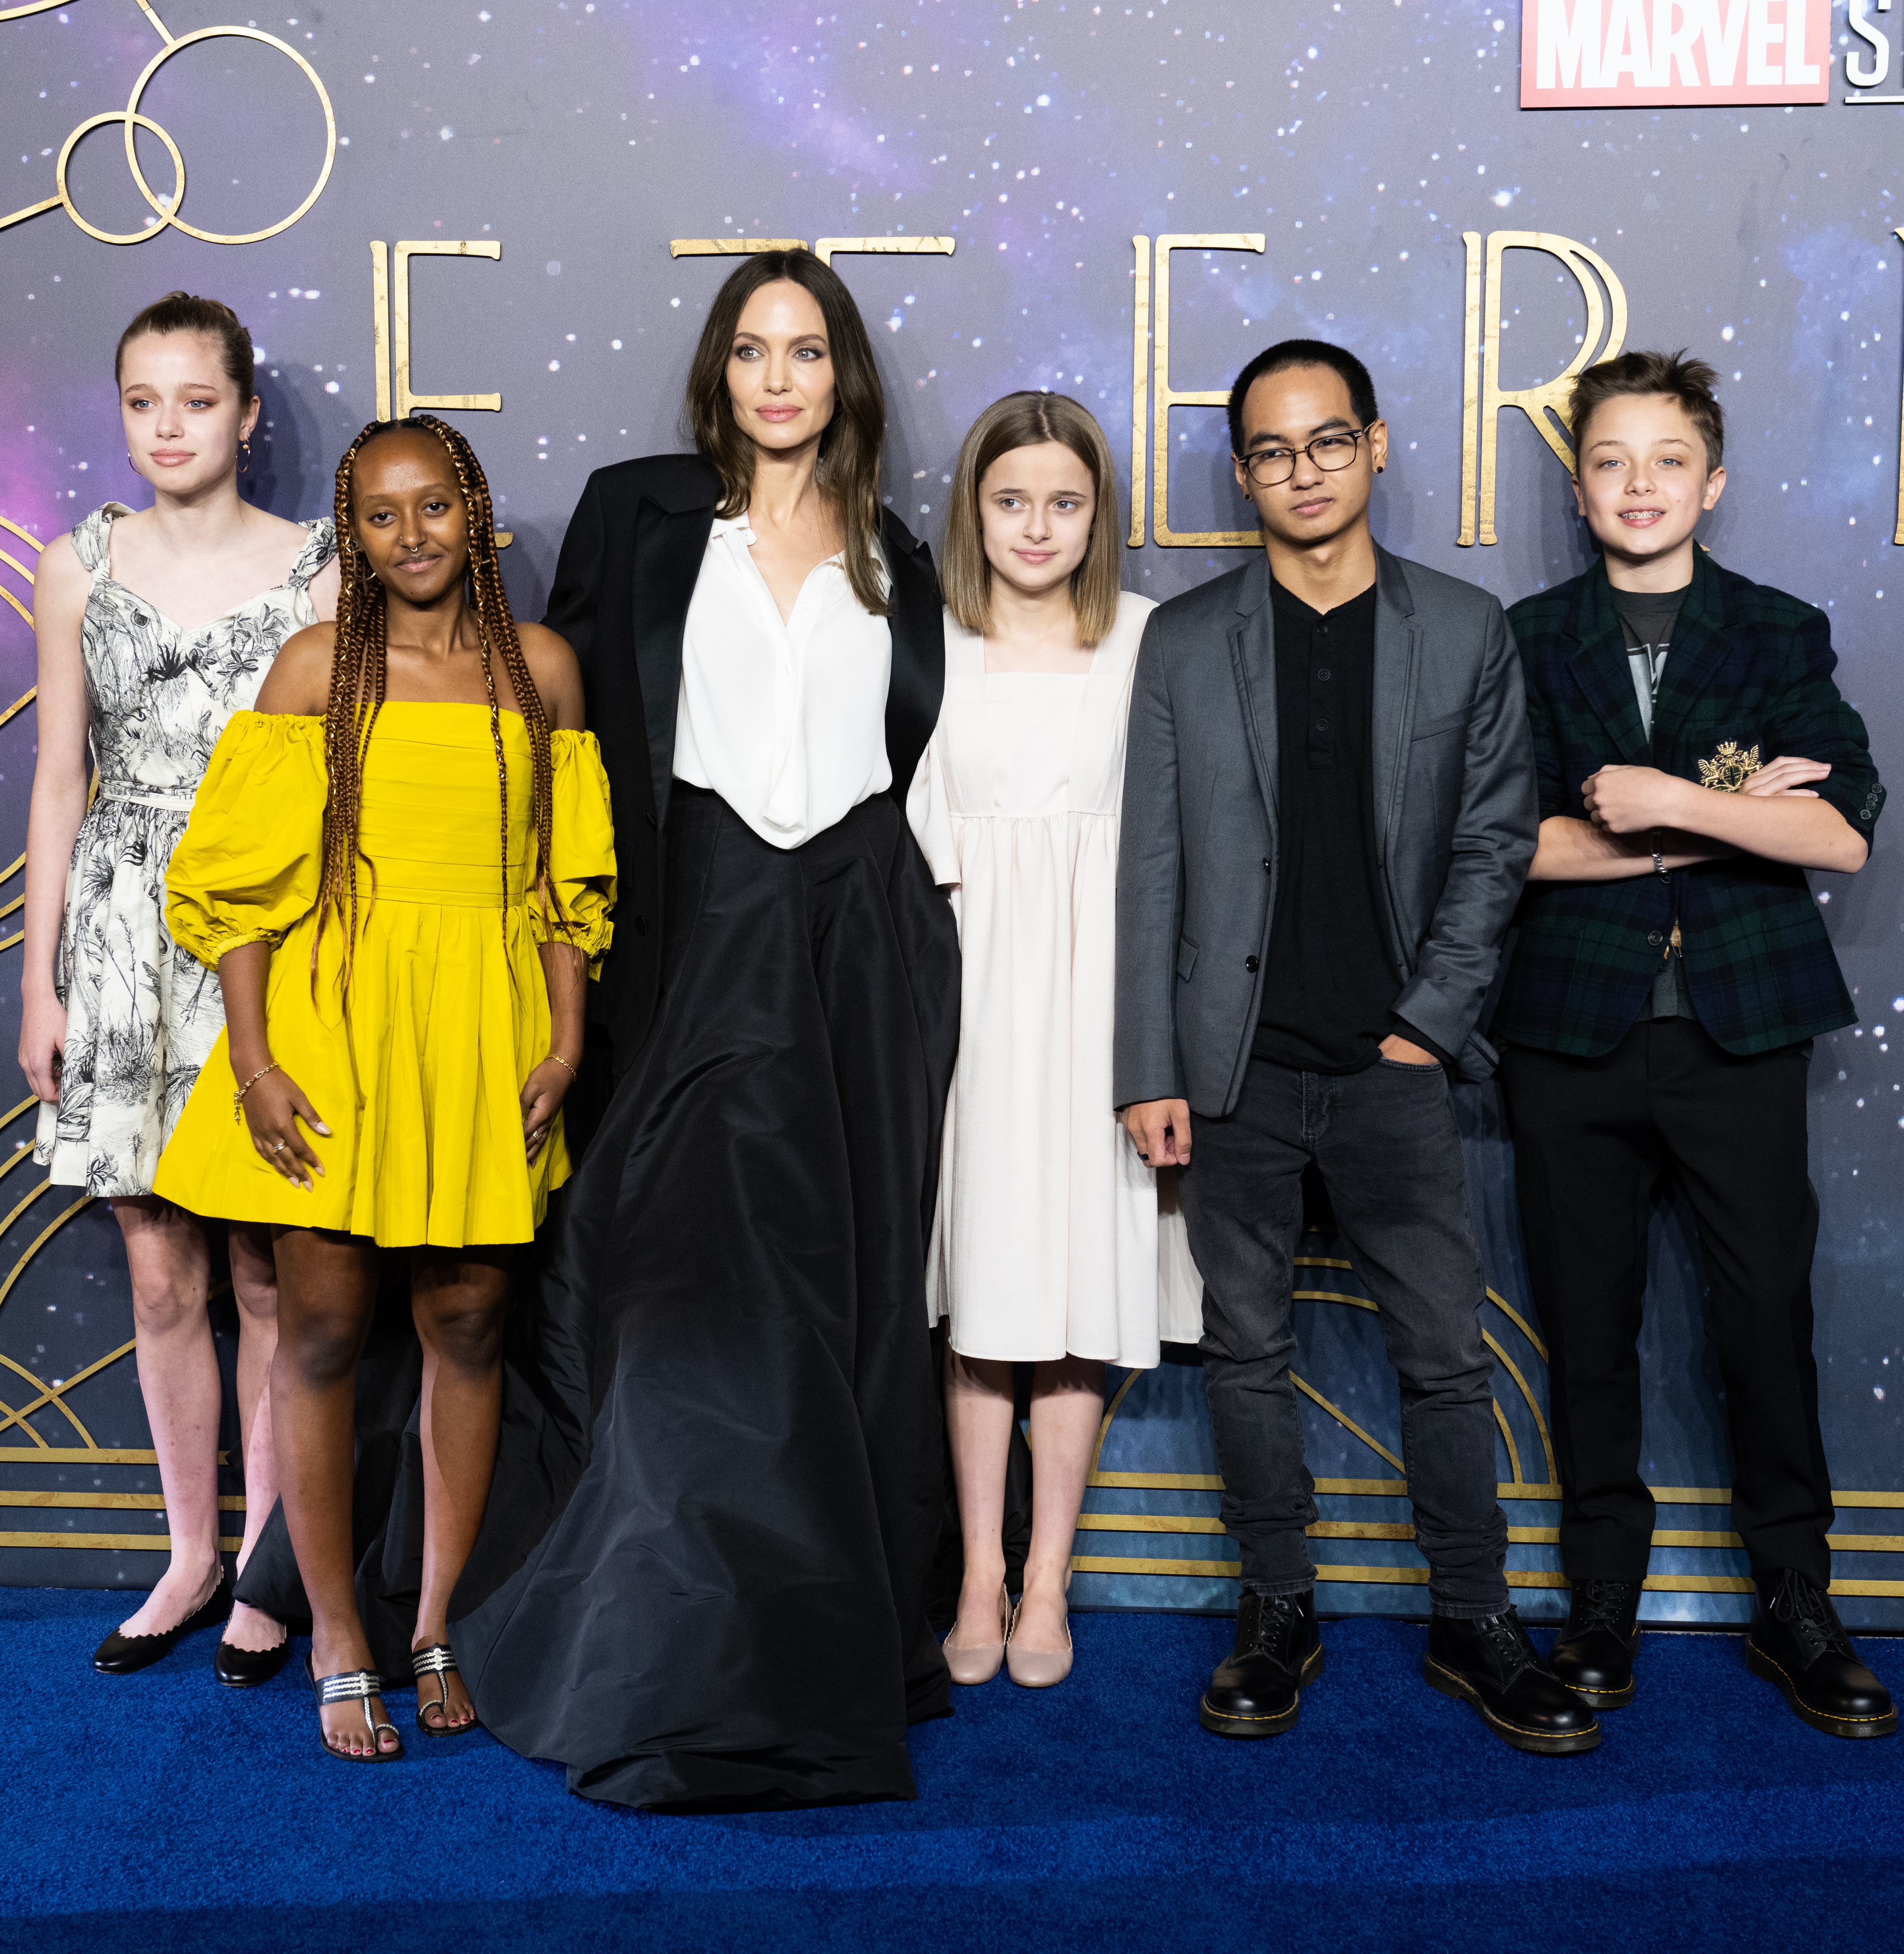 Angelina Jolie with children (l-r) Shiloh, Zahara, Vivienne, Maddox and Knox